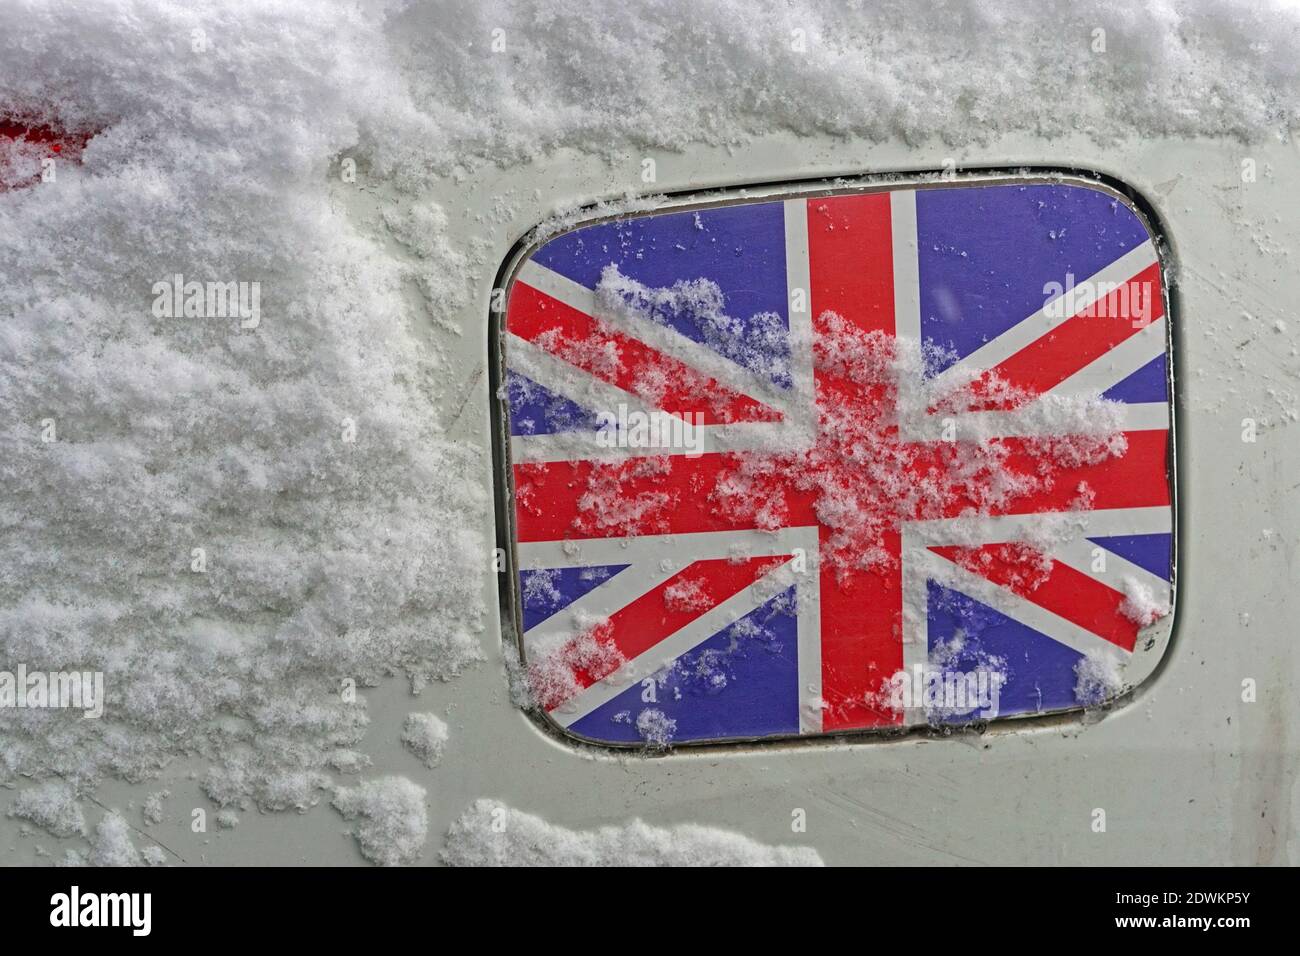 Fuel cap cover with British flag under snow Stock Photo